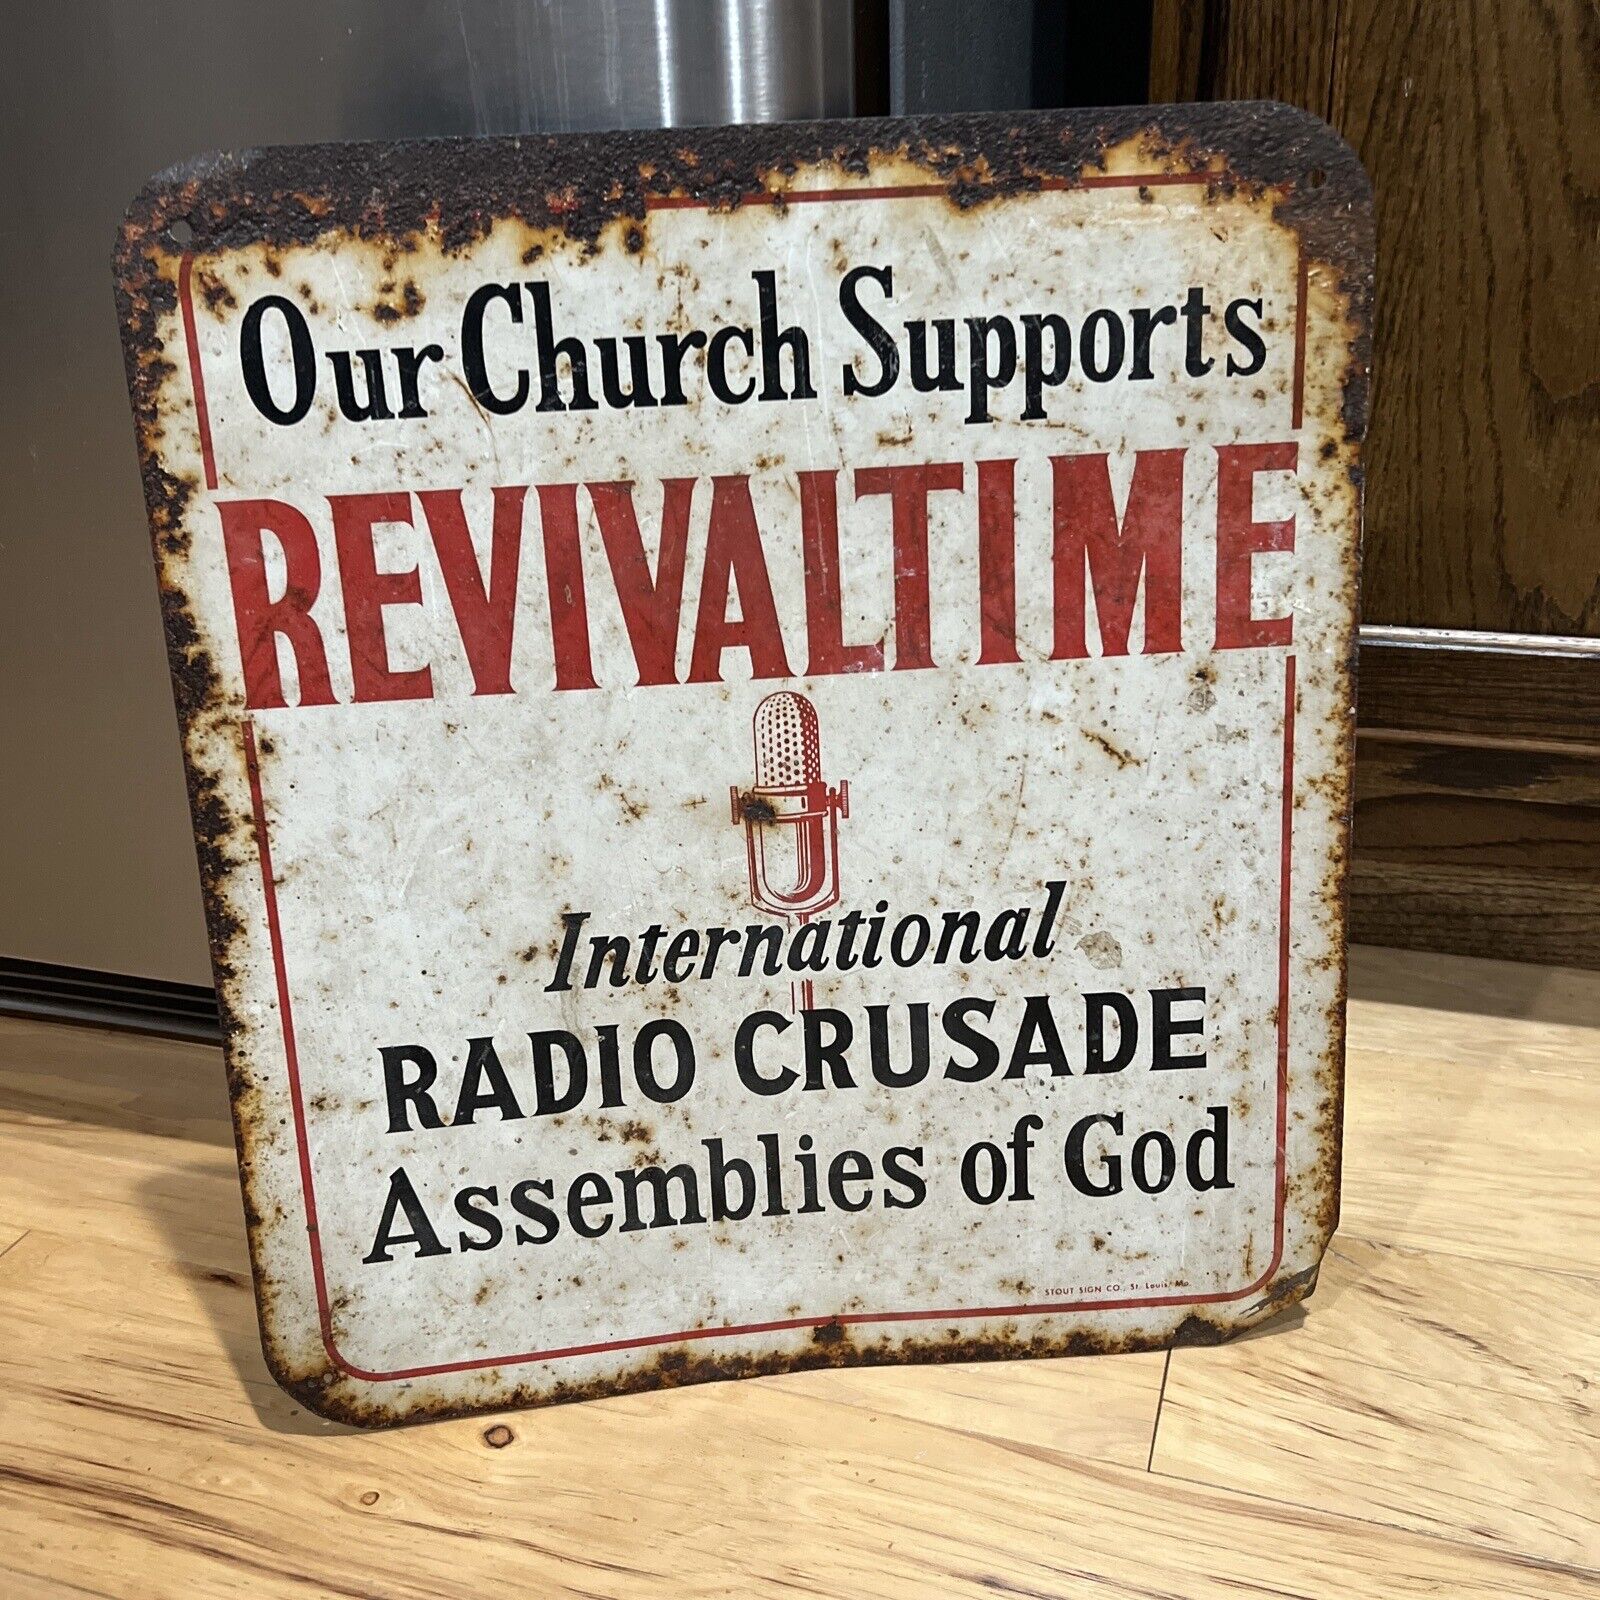 1950 Revivaltime Metal Sign Assemblies of God Radio Crusade Christian Rare Steel